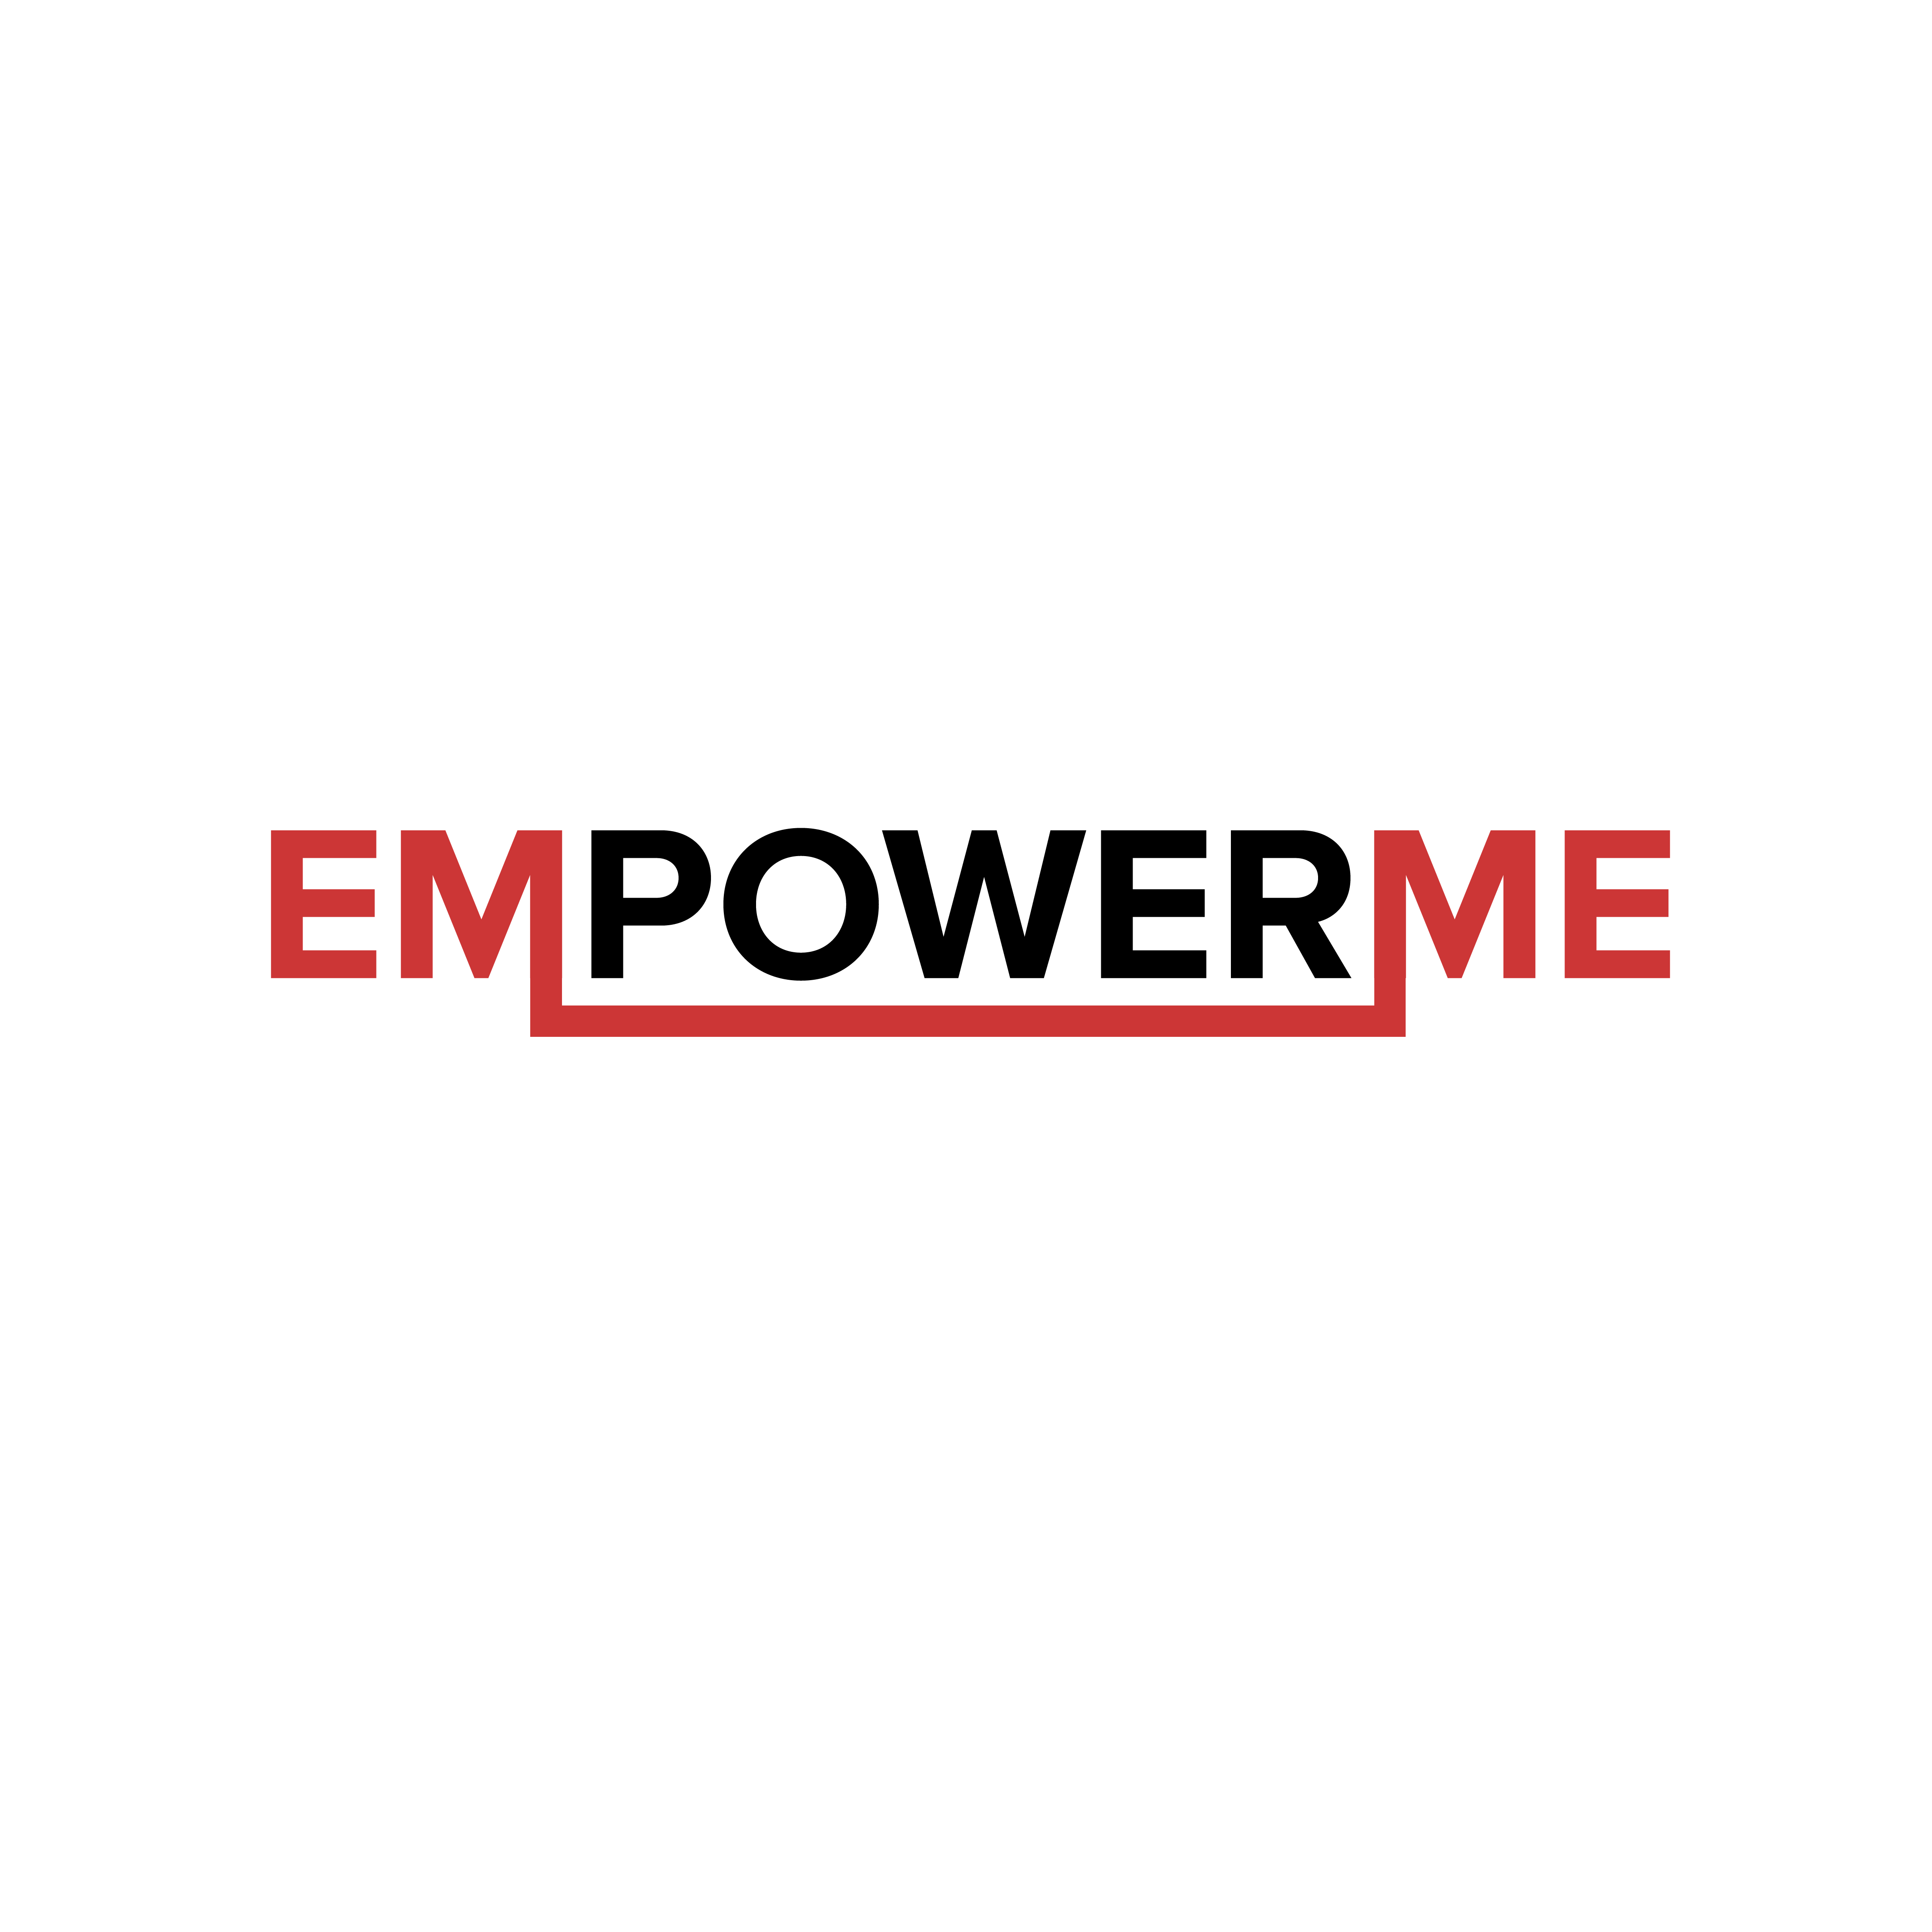 empower me global logo